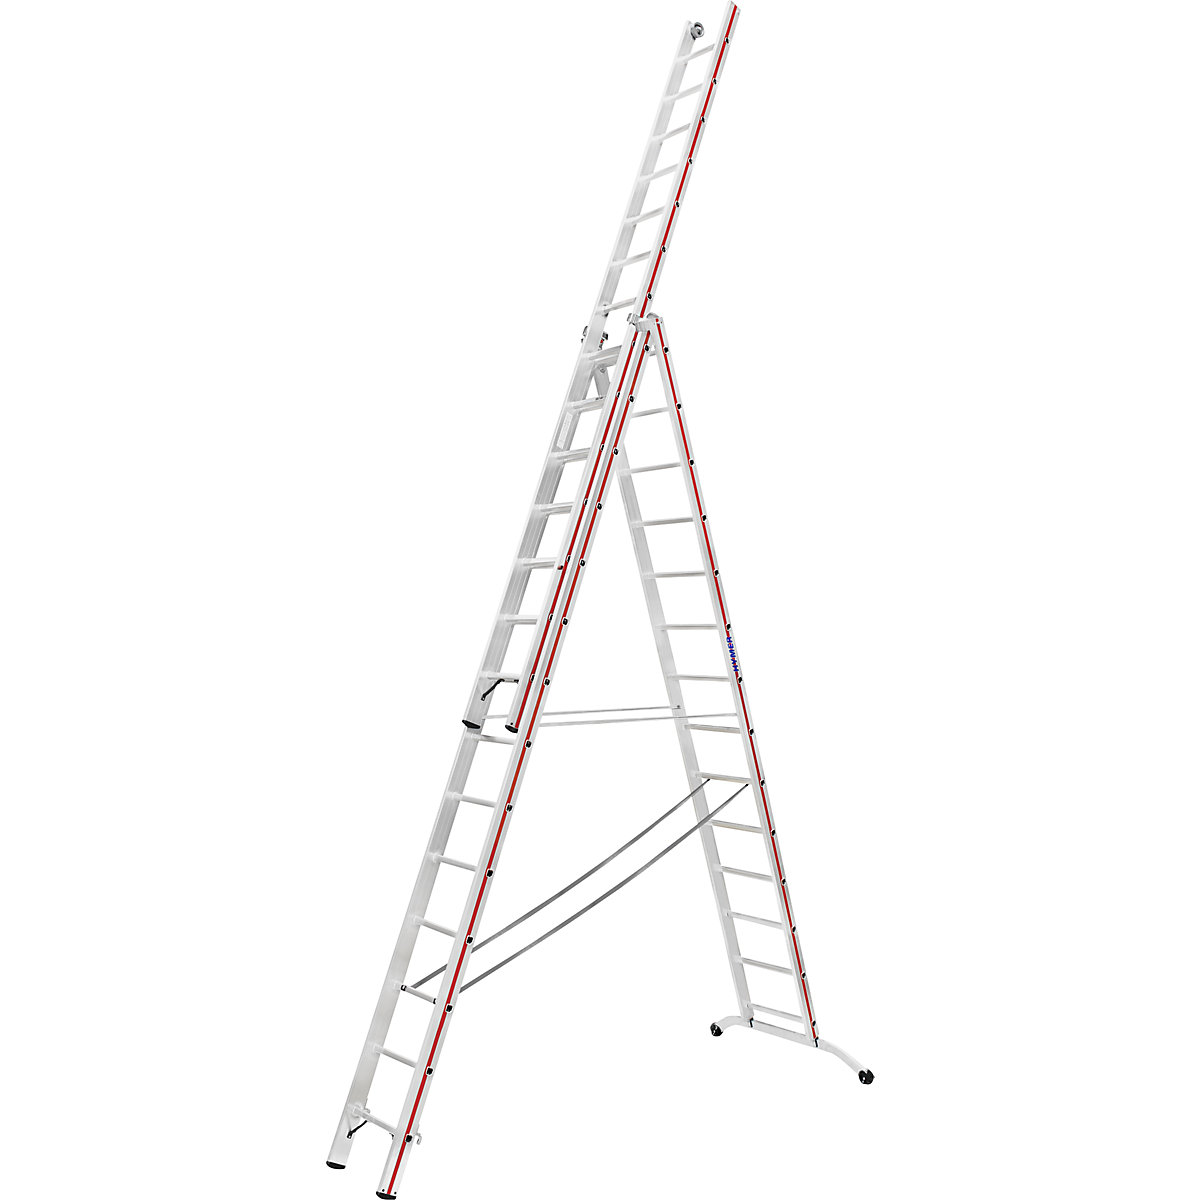 Escalera multiusos de aluminio – HYMER, modelo industrial con cabezal rodante, 3 x 14 peldaños, altura máx. de trabajo 10,42 m-11